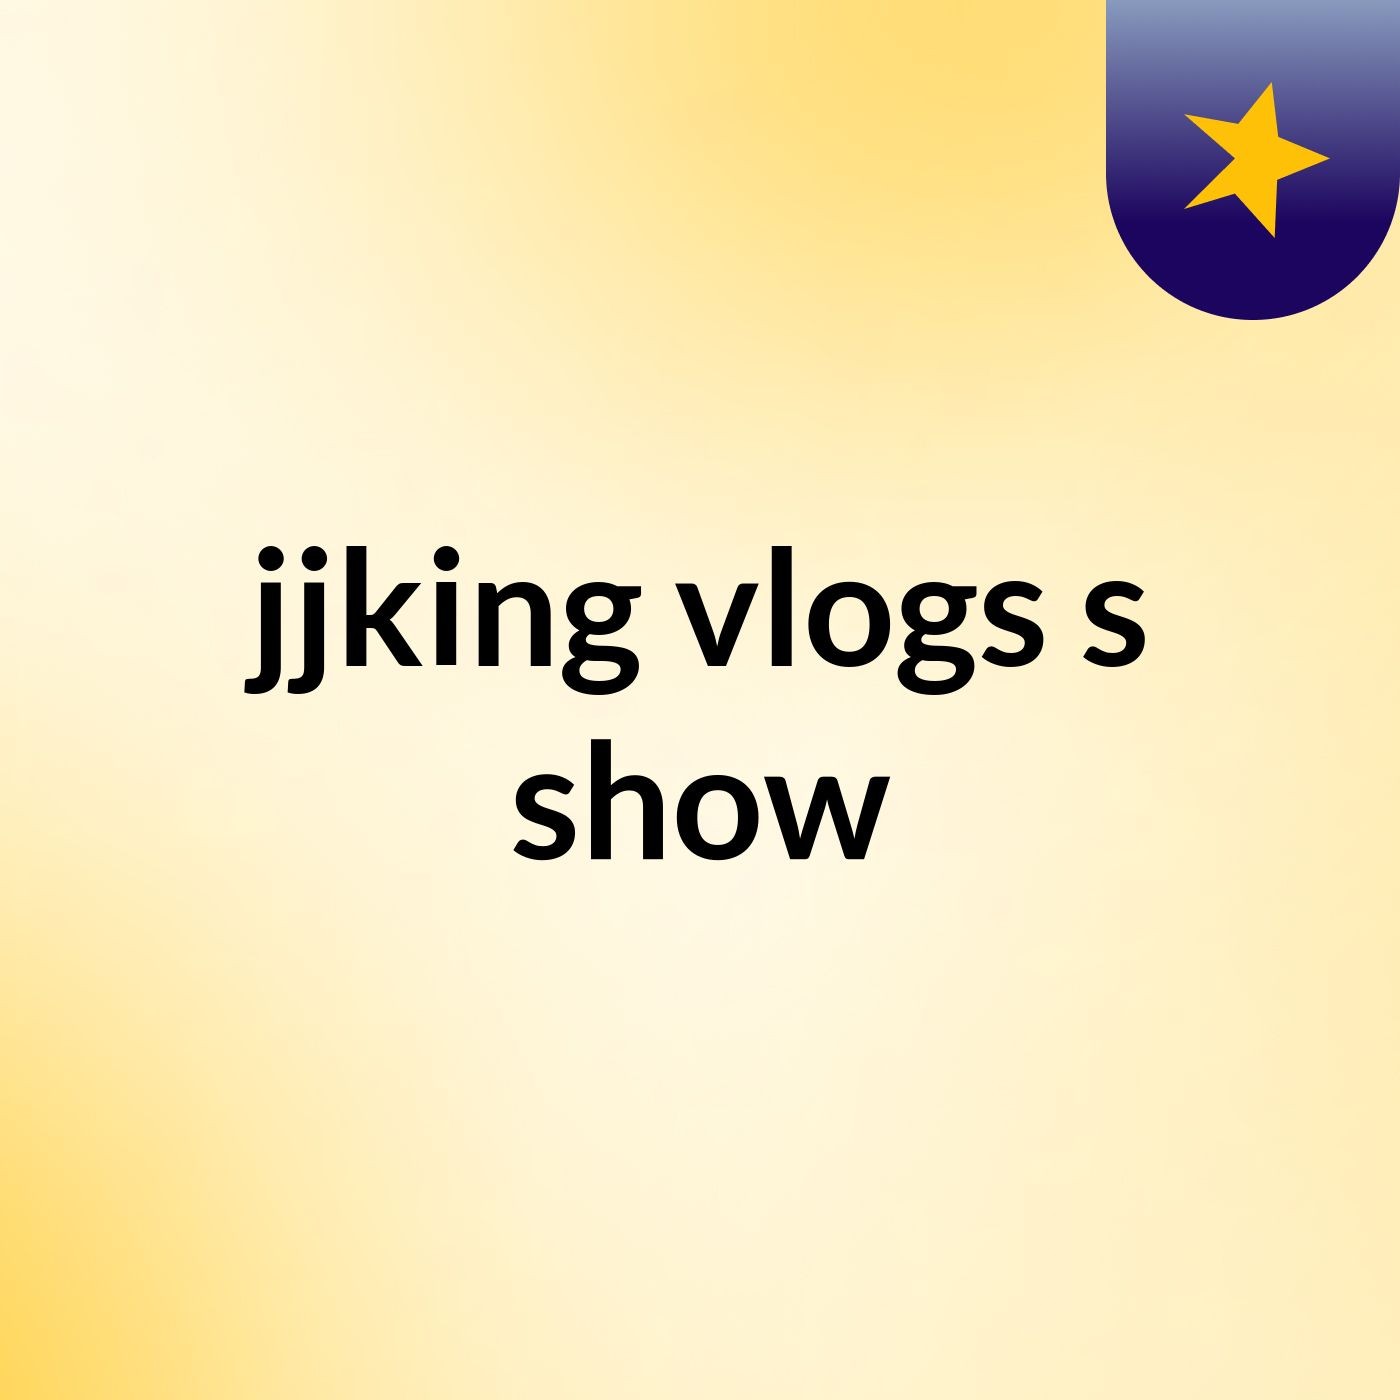 jjking vlogs's show